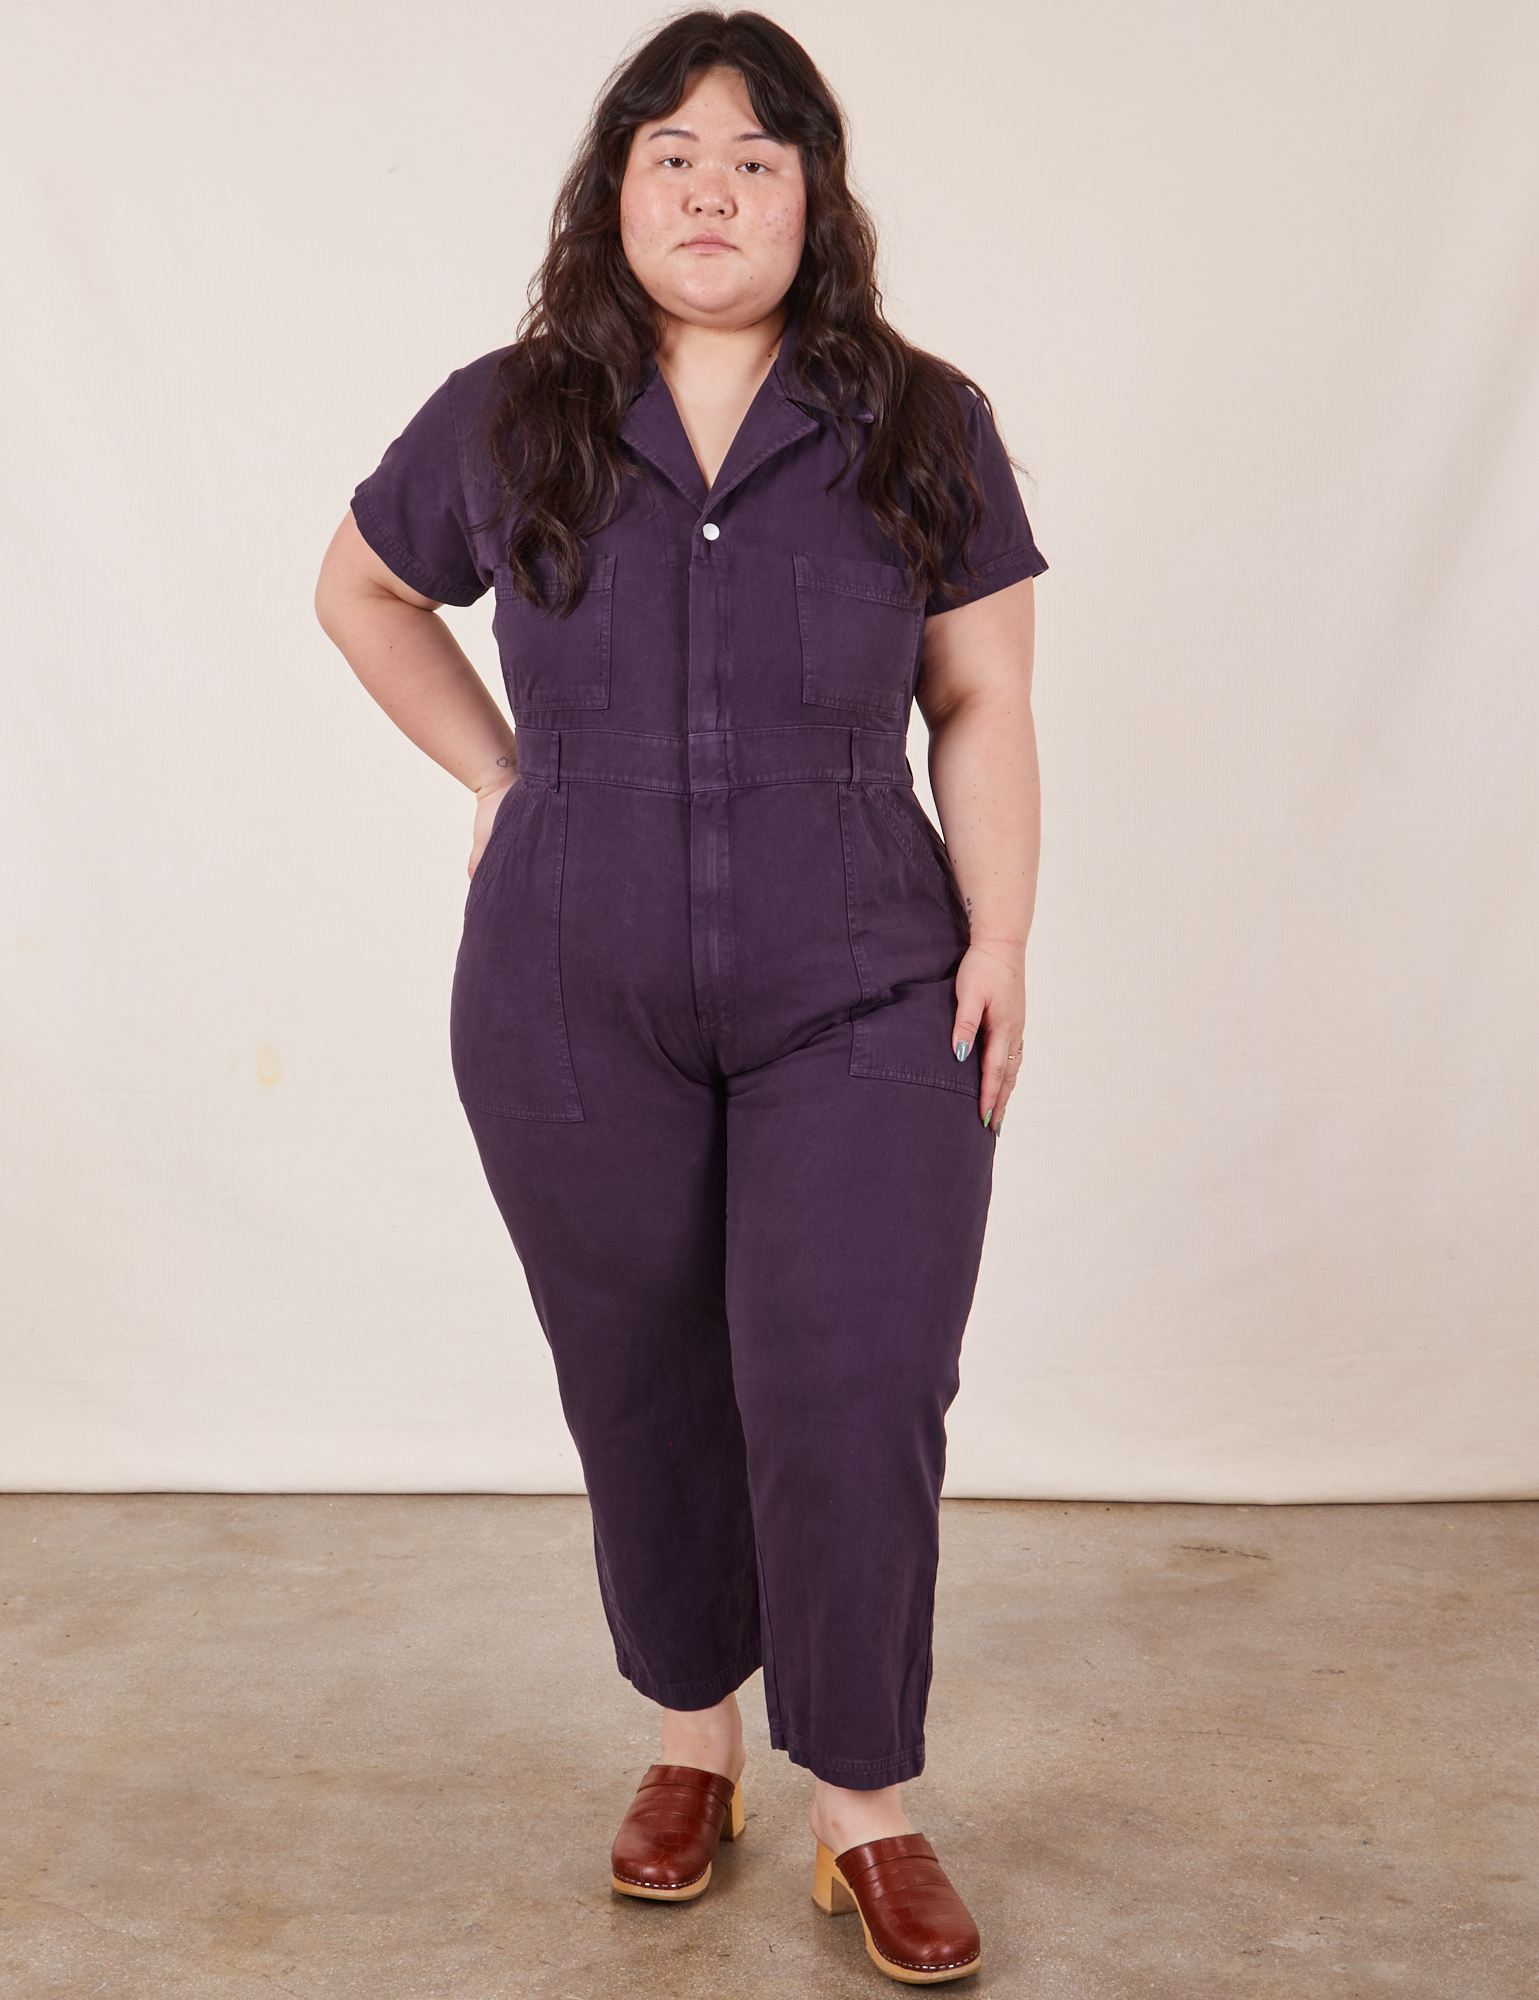 Ashley wearing 1XL Petite Petite Short Sleeve Jumpsuit in Nebula Purple